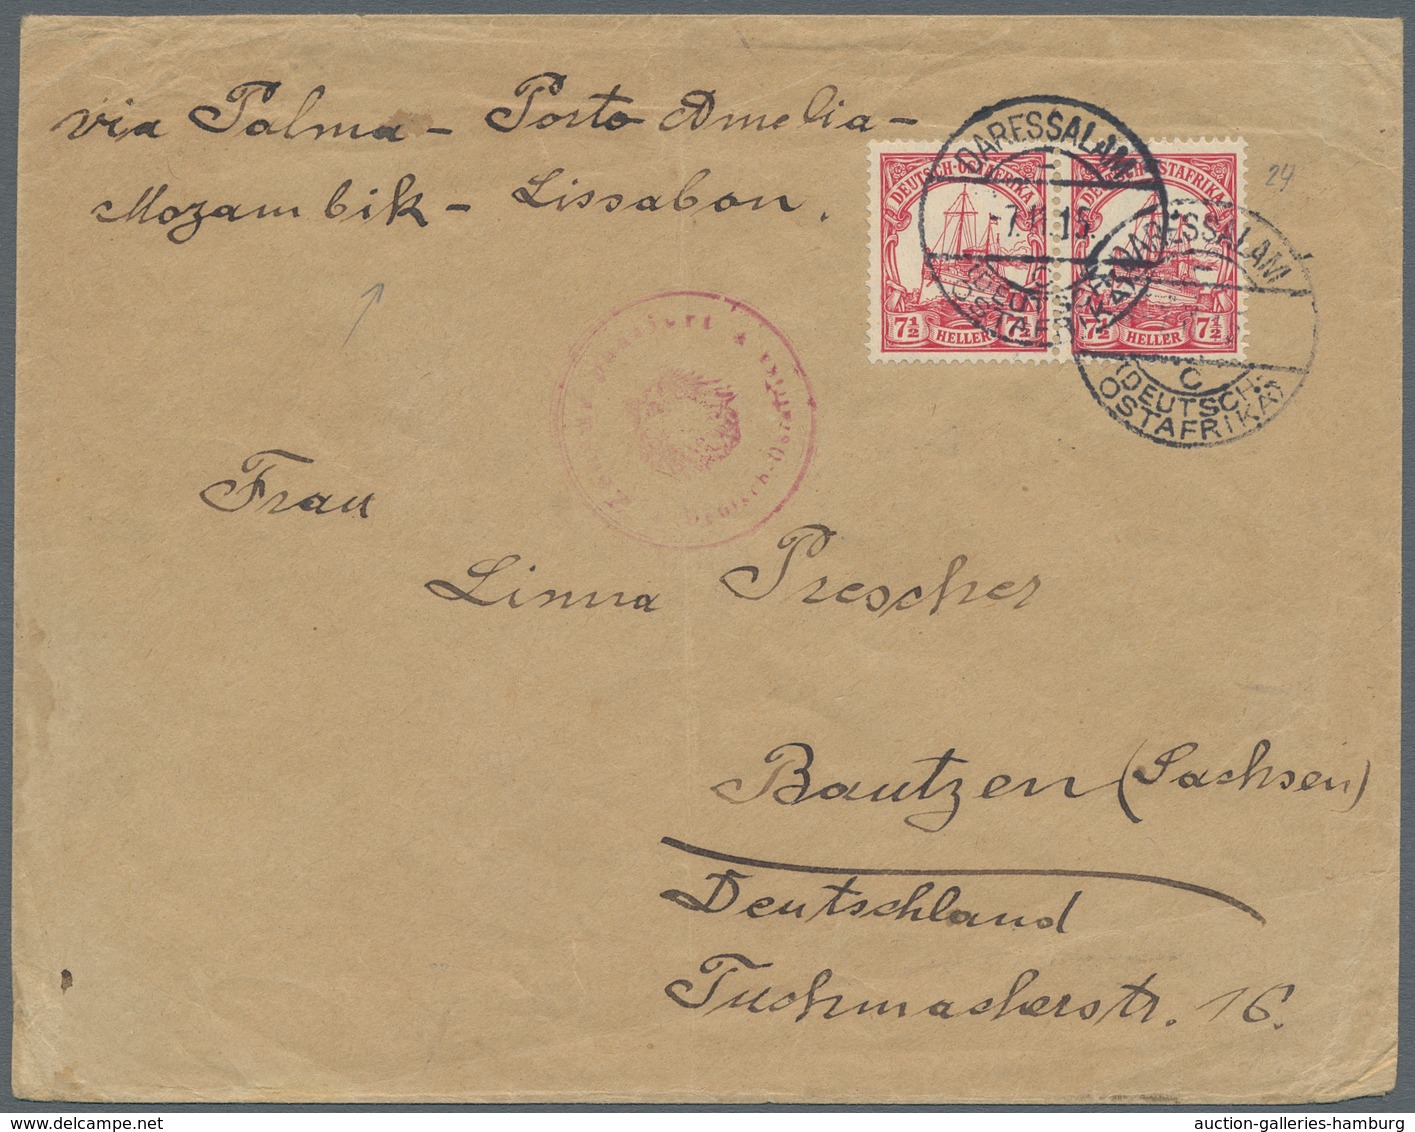 Deutsch-Ostafrika - Stempel: 1915 - DARESSALAM (7.11.15). 7 1/2 Heller, Mi.-Nr. 32 Als Waagerechtes - África Oriental Alemana